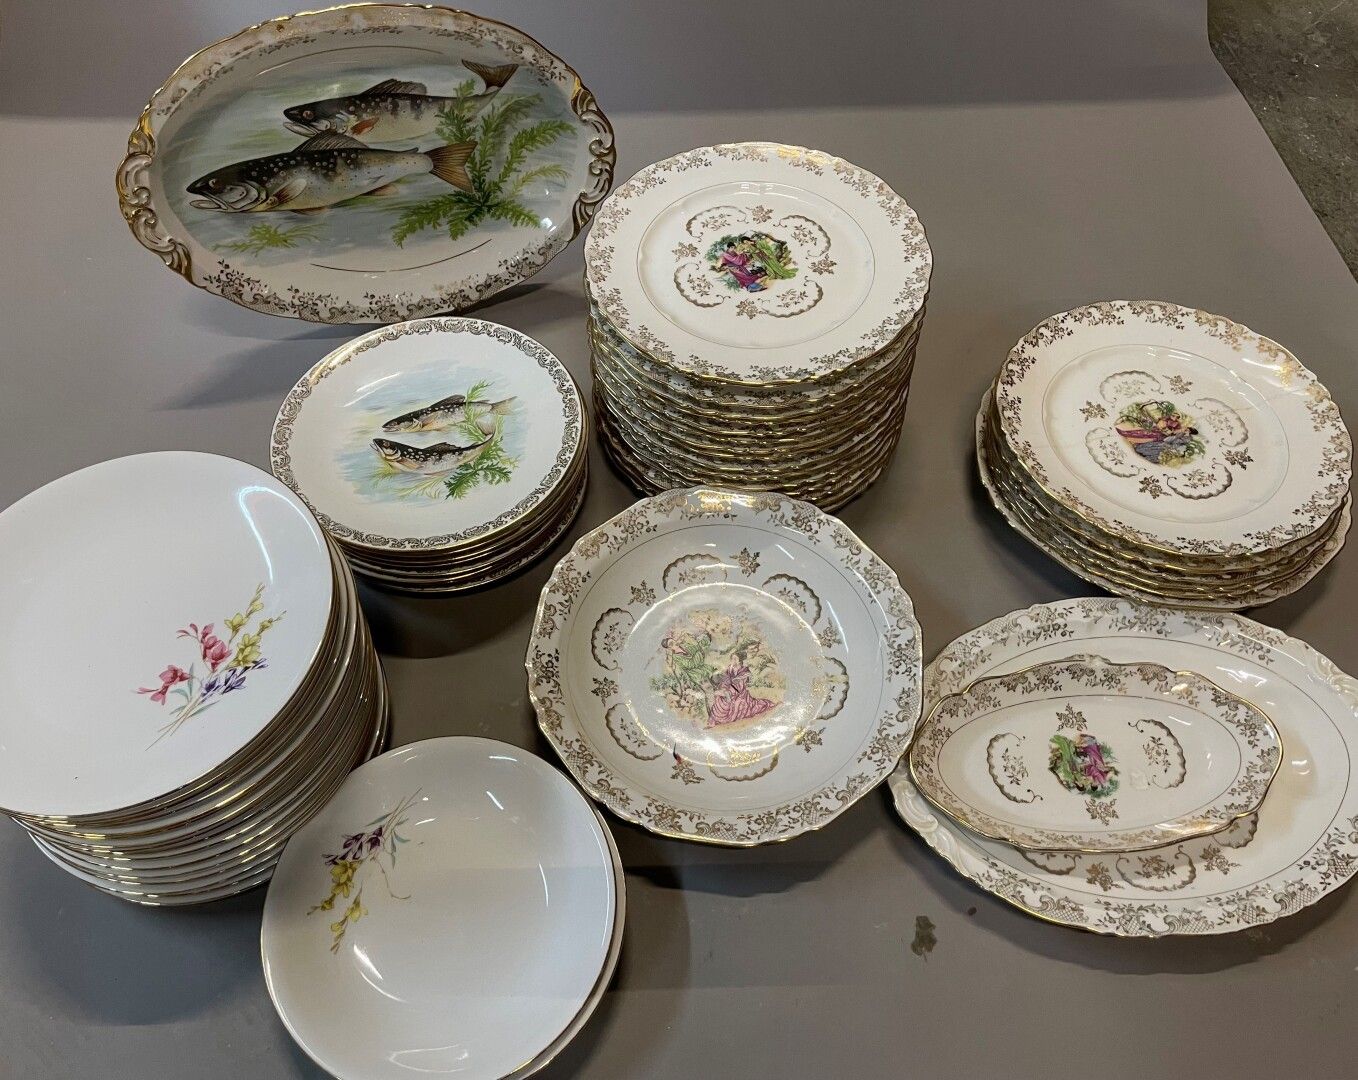 Null 瓷器晚餐服务的三个部分，装饰有鱼、日本字和花，包括餐盘、盘子、汤盘和一些碗。

(2例)